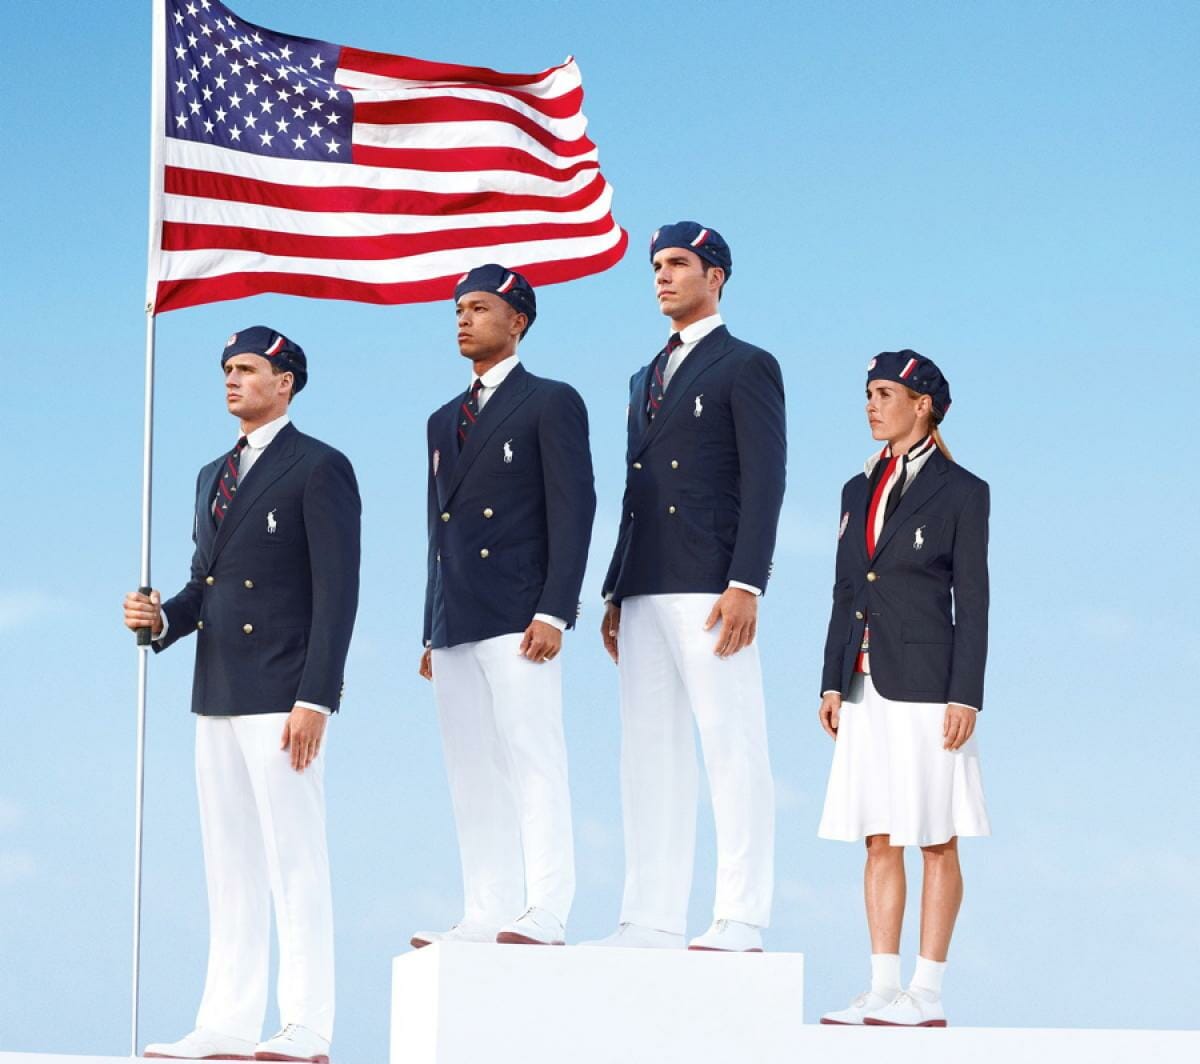 USA olympic uniforms 2012